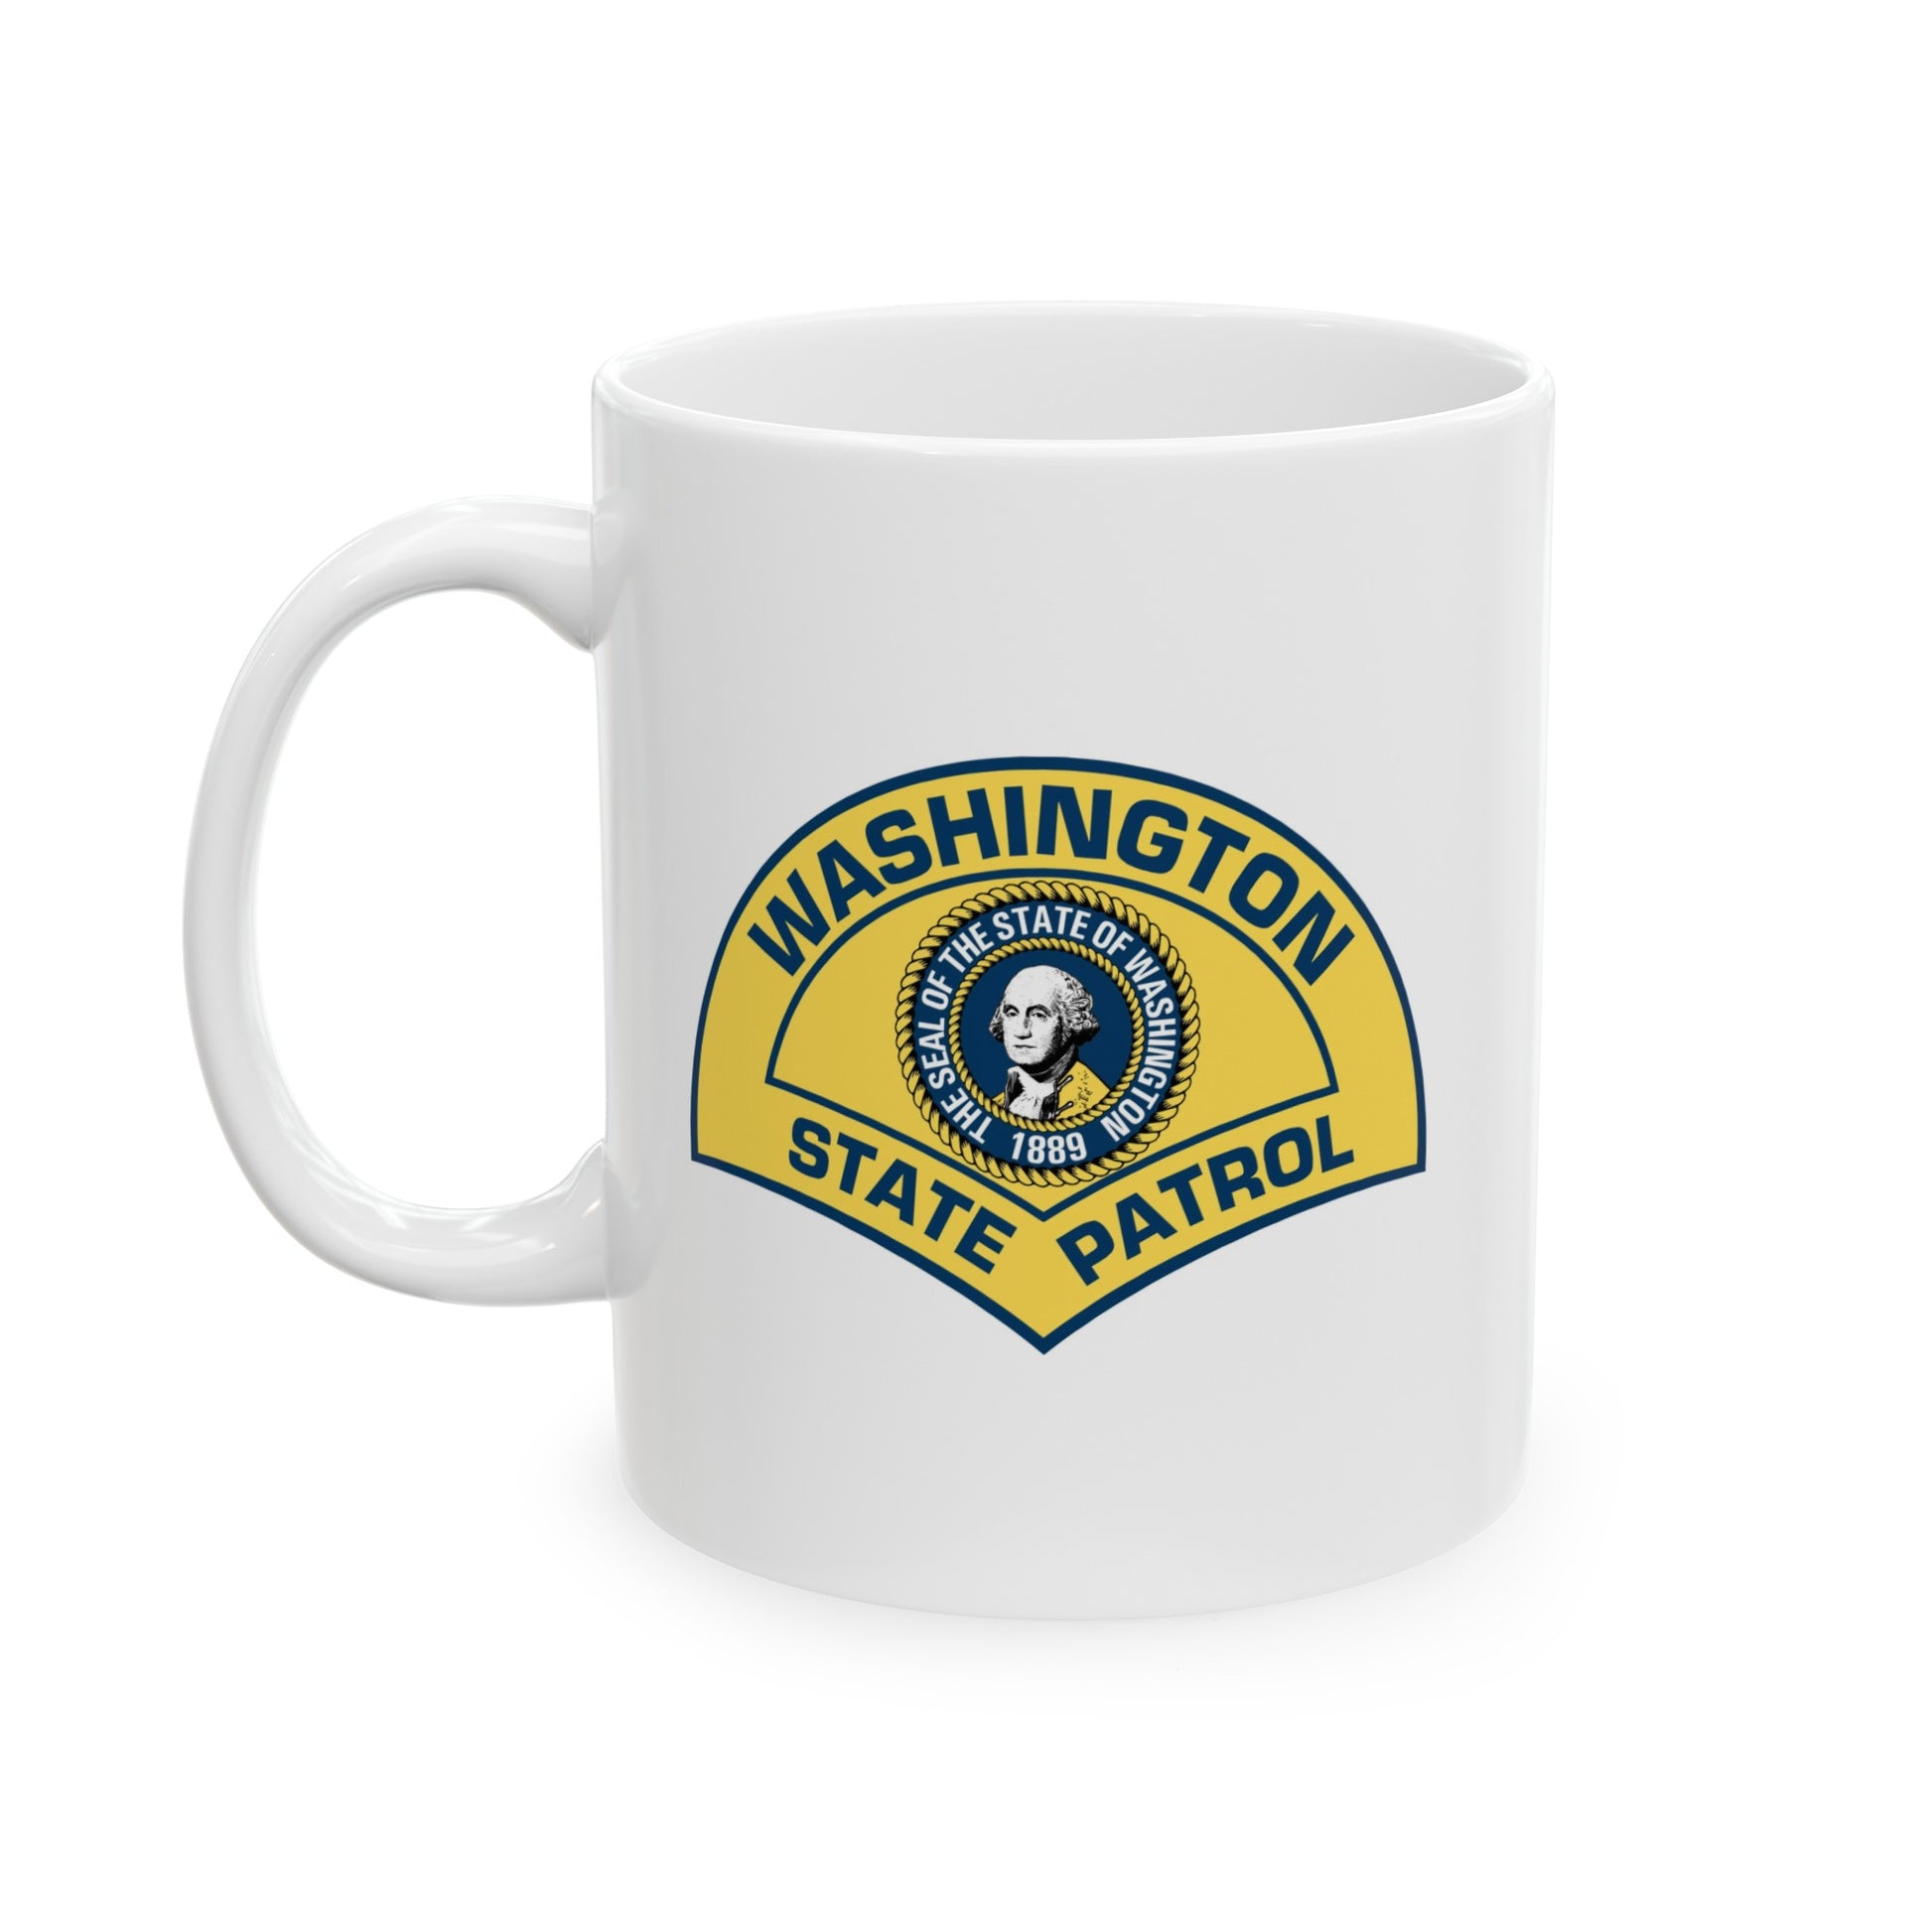 Washington State Patrol Coffee Mug - Double Sided White Ceramic 11oz by TheGlassyLass.com